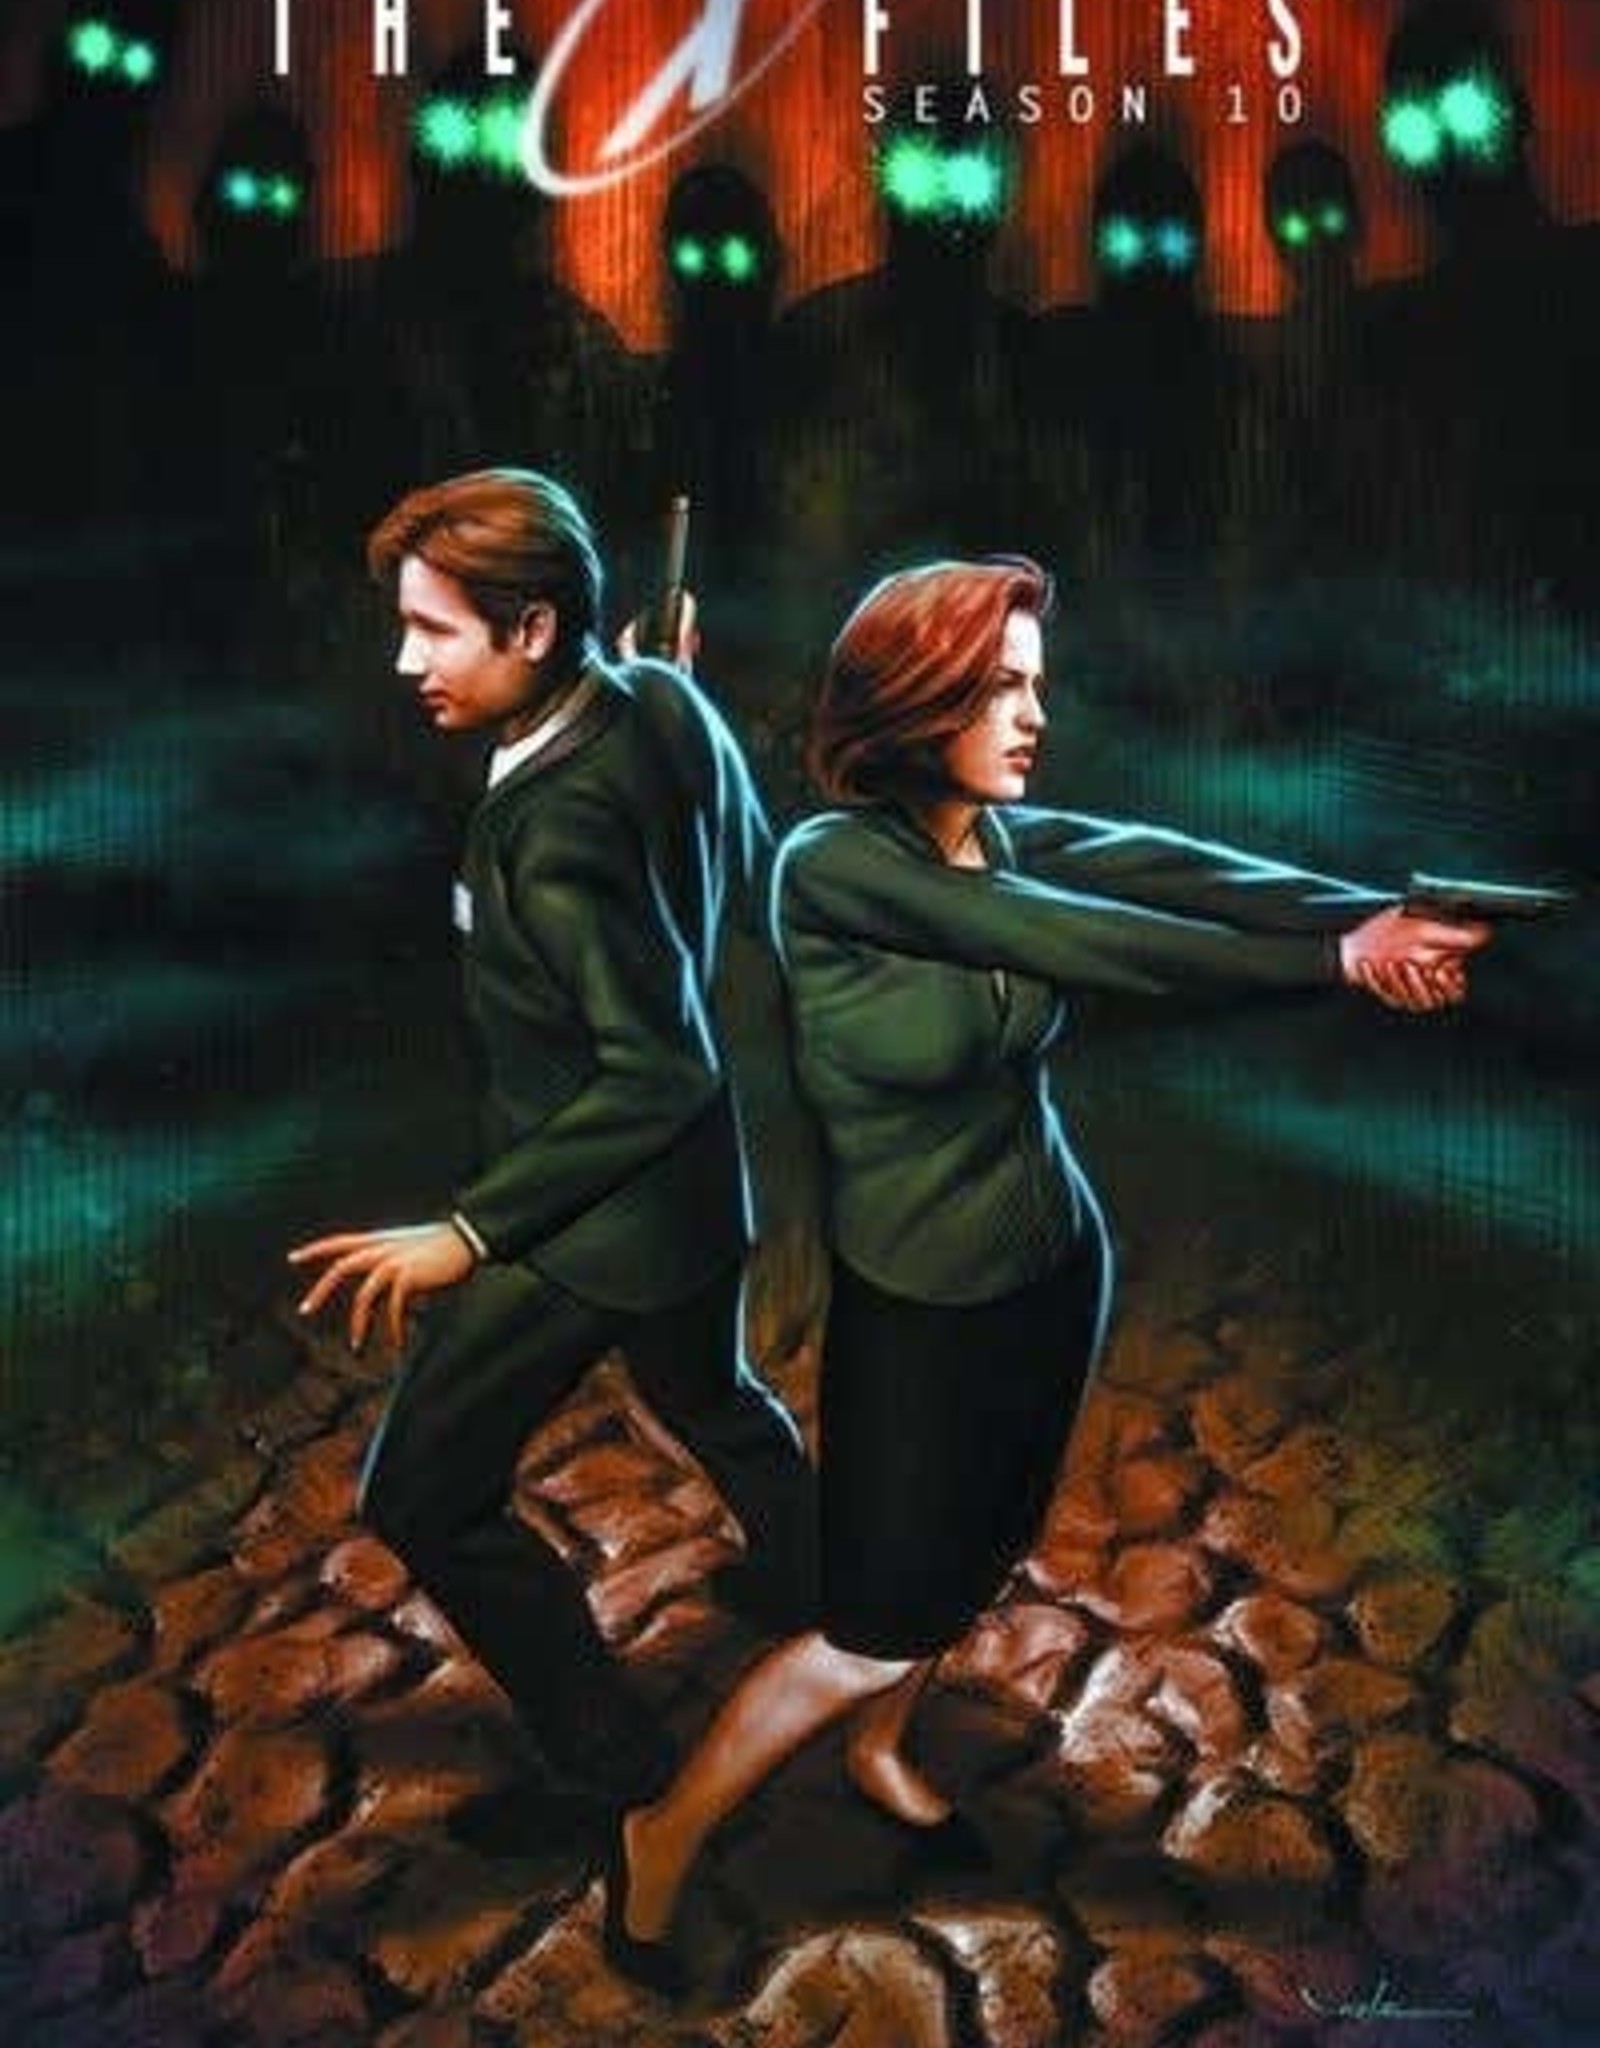 IDW Publishing X-Files Season 10 Hardcover Volume 01